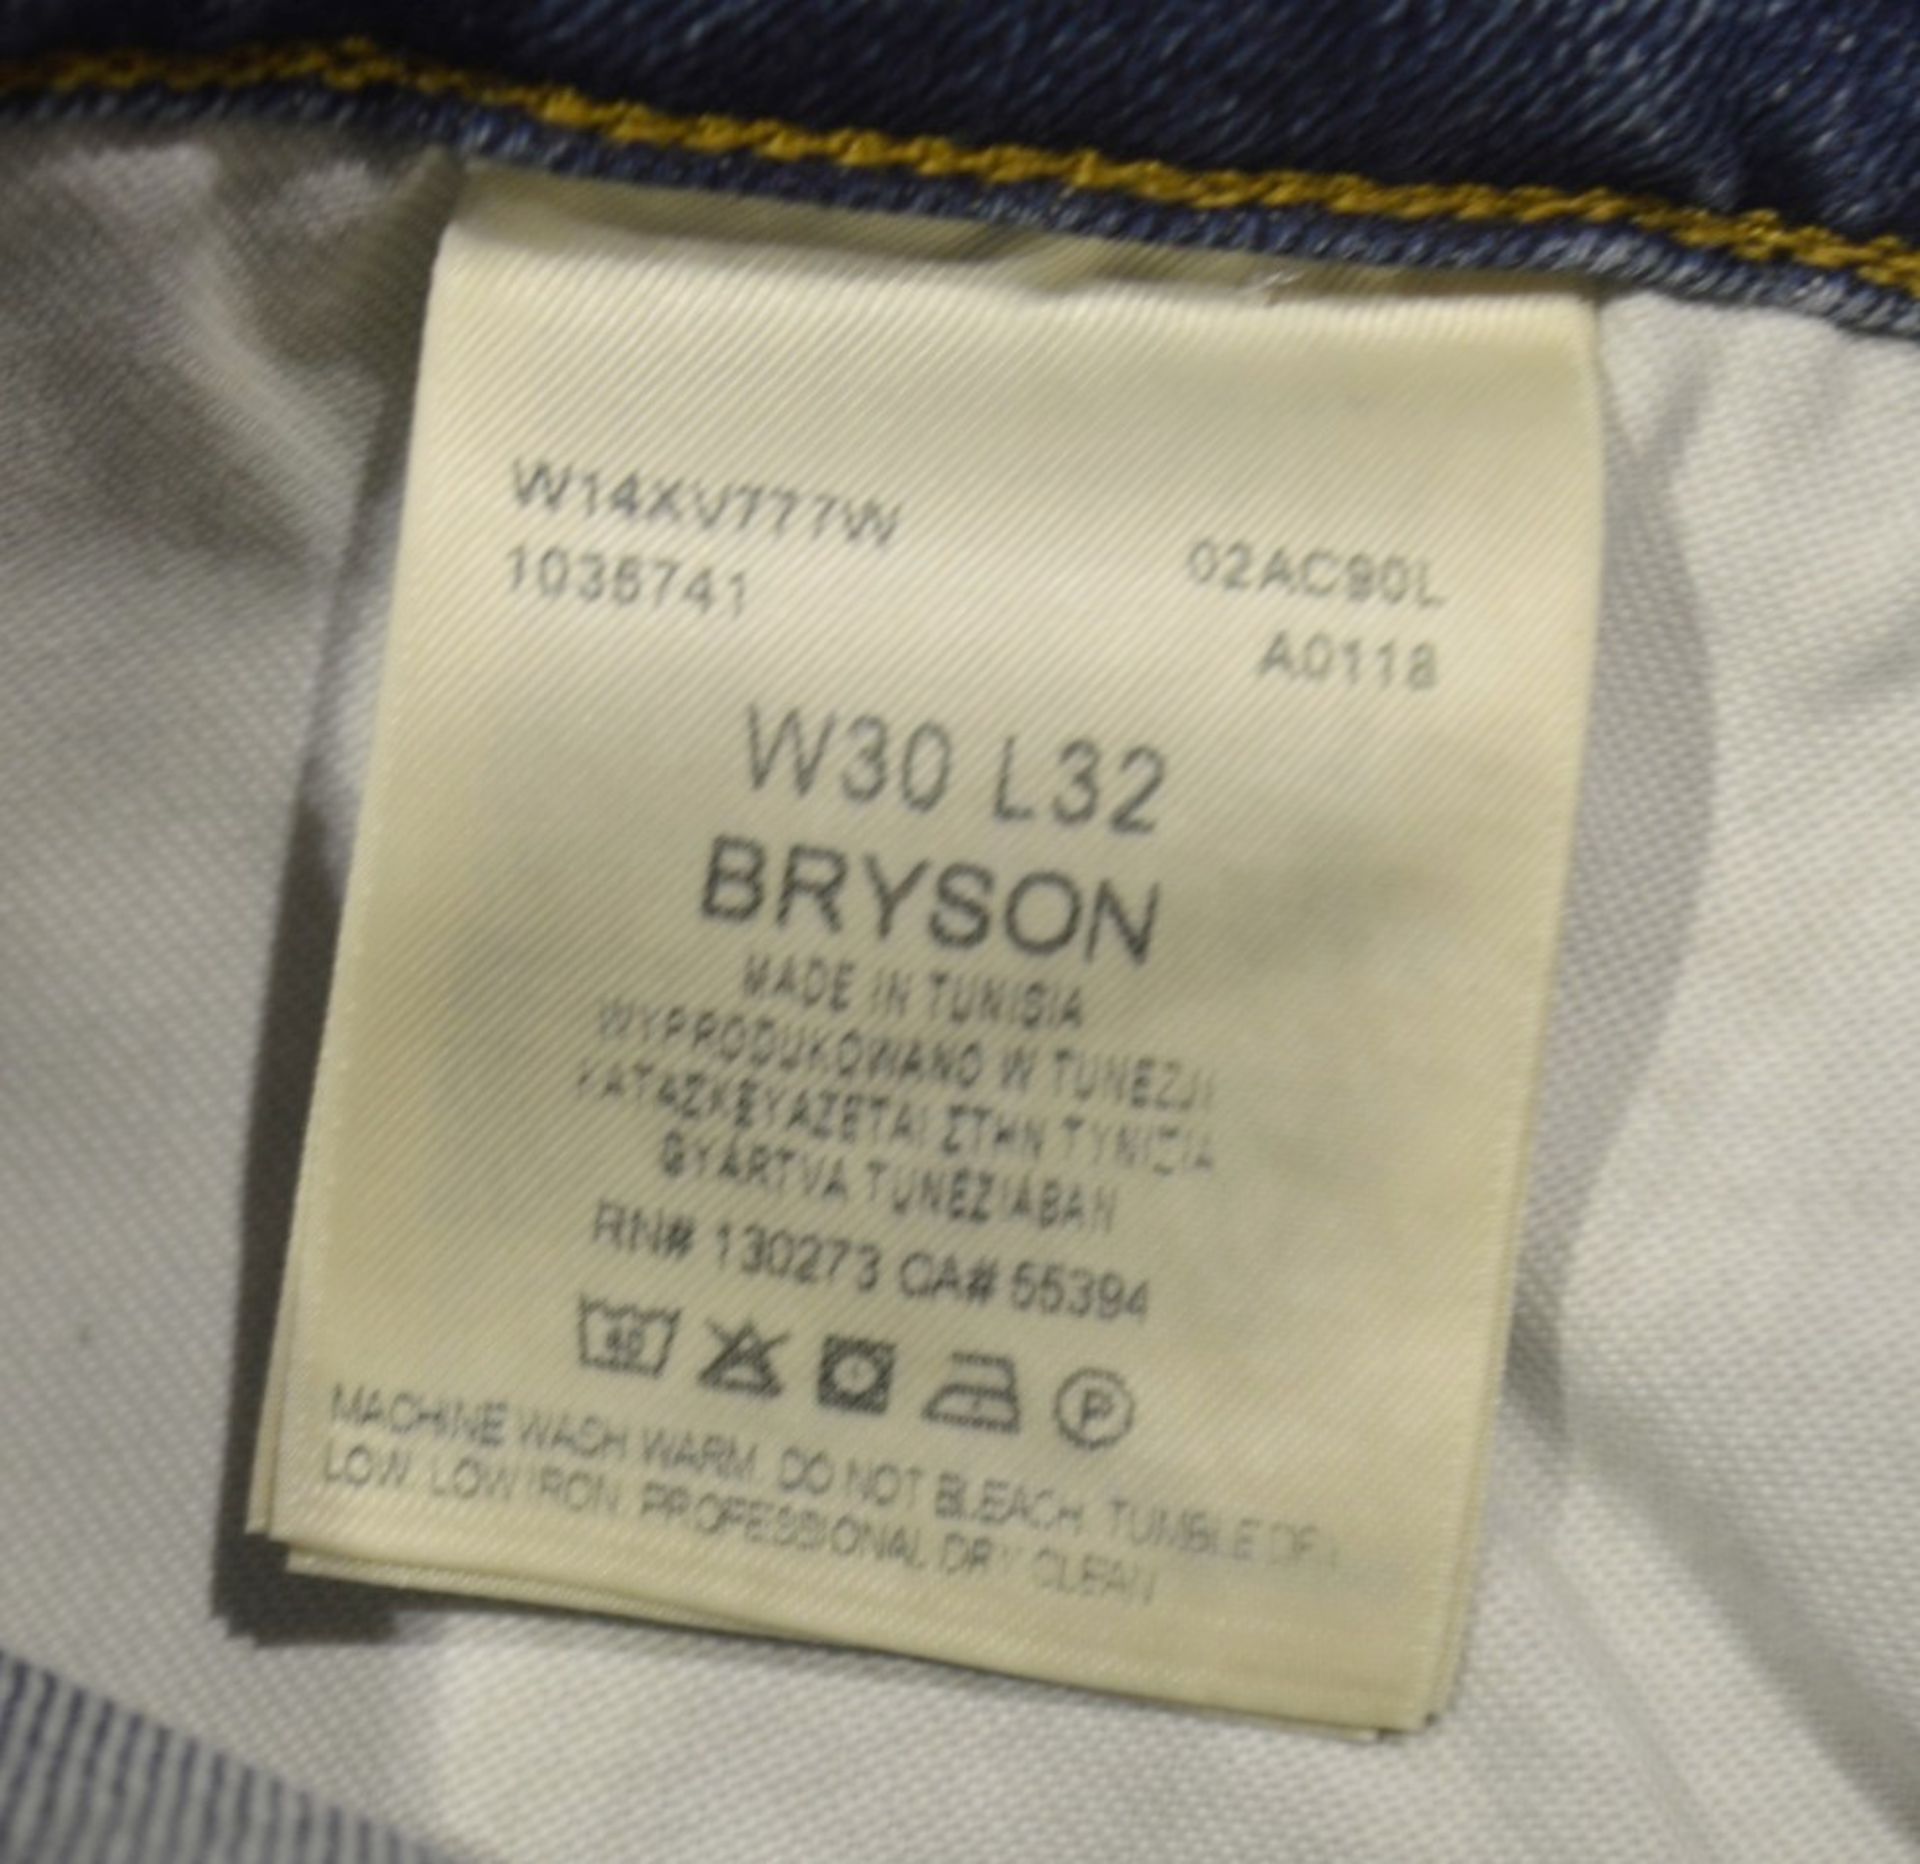 1 x Pair Of Men's Genuine Wrangler BRYSON Skinny Jeans In Blue - Size: UK 30/32 - Preowned, Like - Image 7 of 10